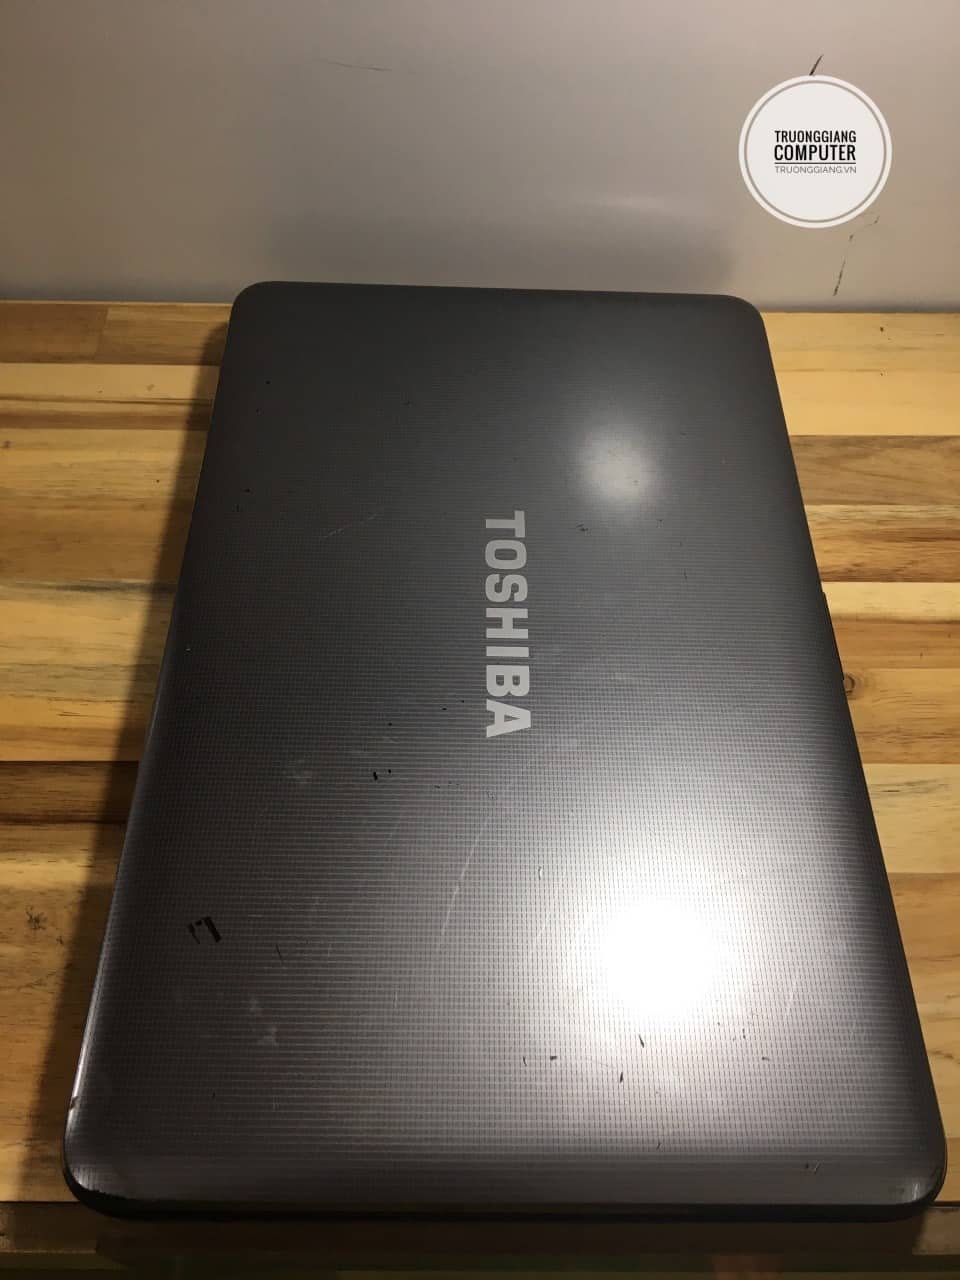 Mặt A laptop Toshiba Satellite C855D